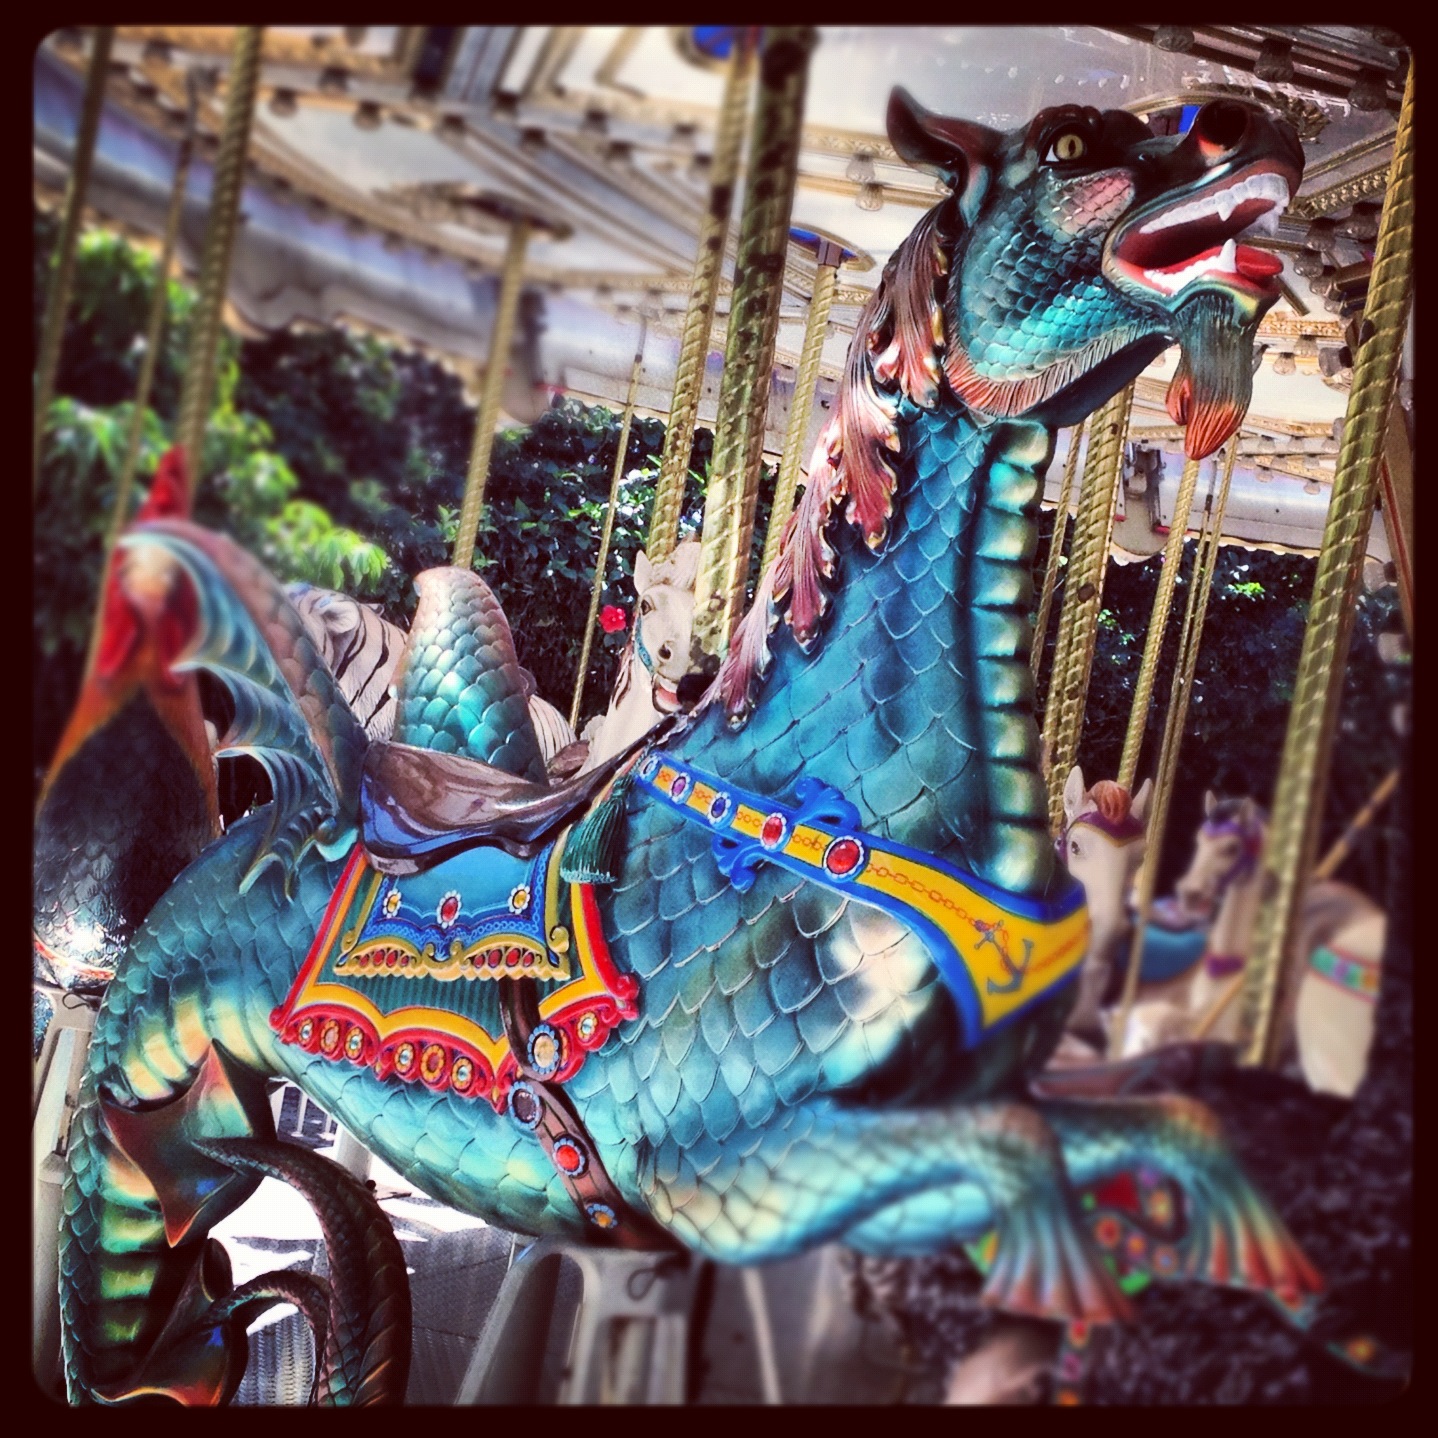 Sea Horse Dragon on the Carousel